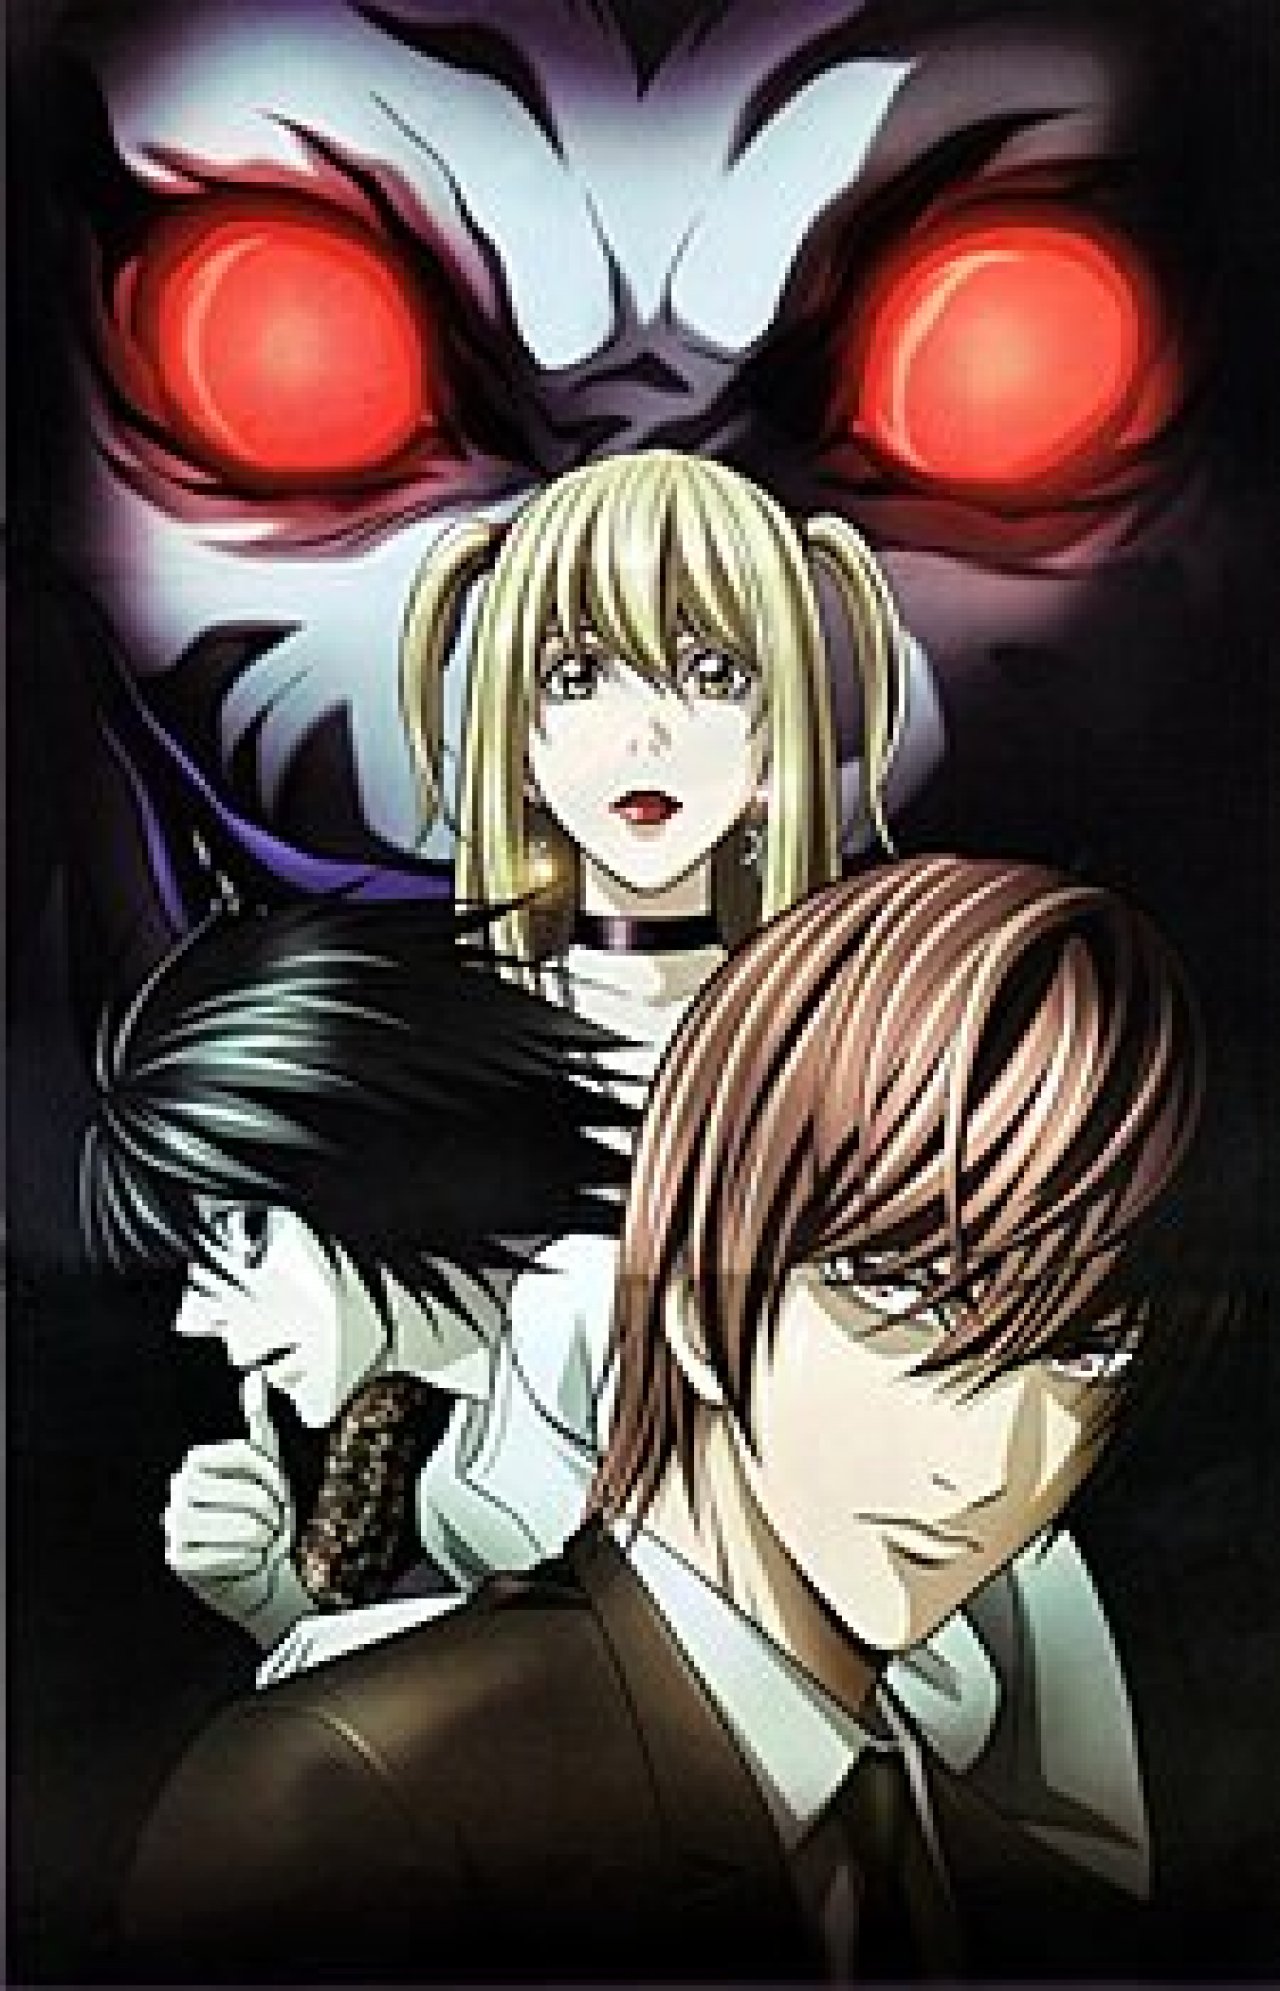 Death Note – Anime – Culturando Geral